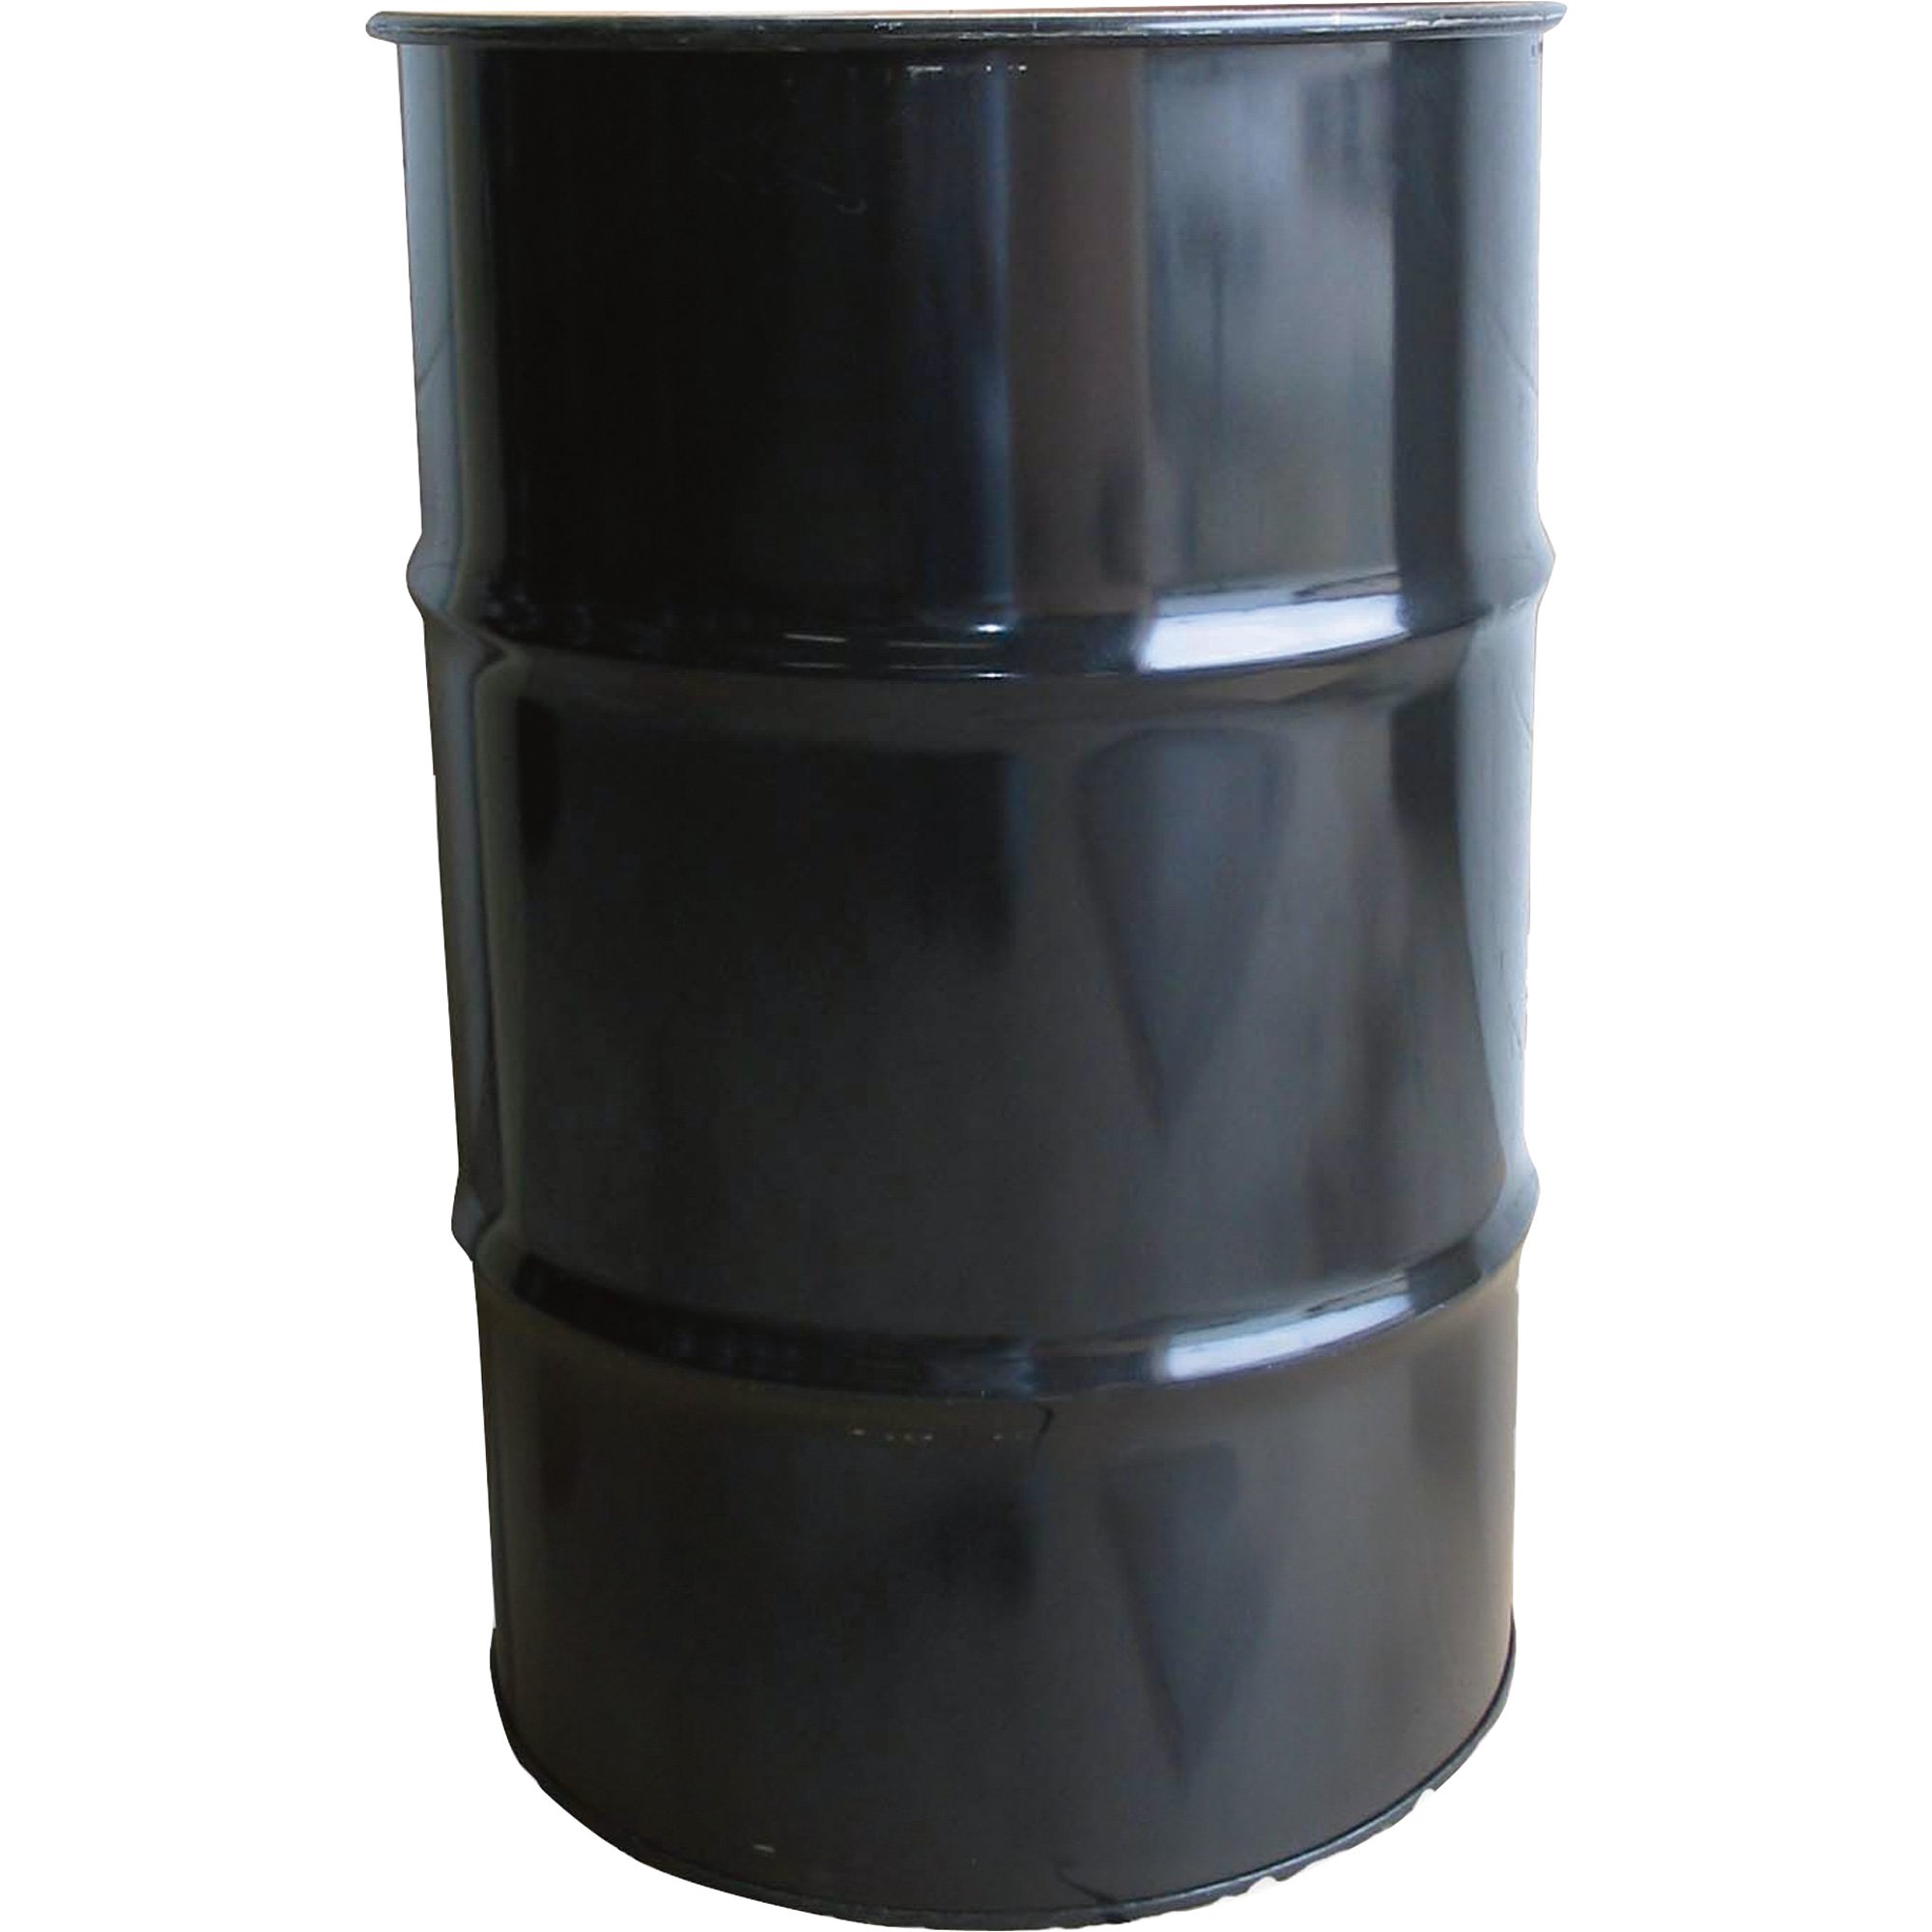 MAG 1 Motor Oil — SAE 30, 55-Gallon Drum | Northern Tool + Equipment